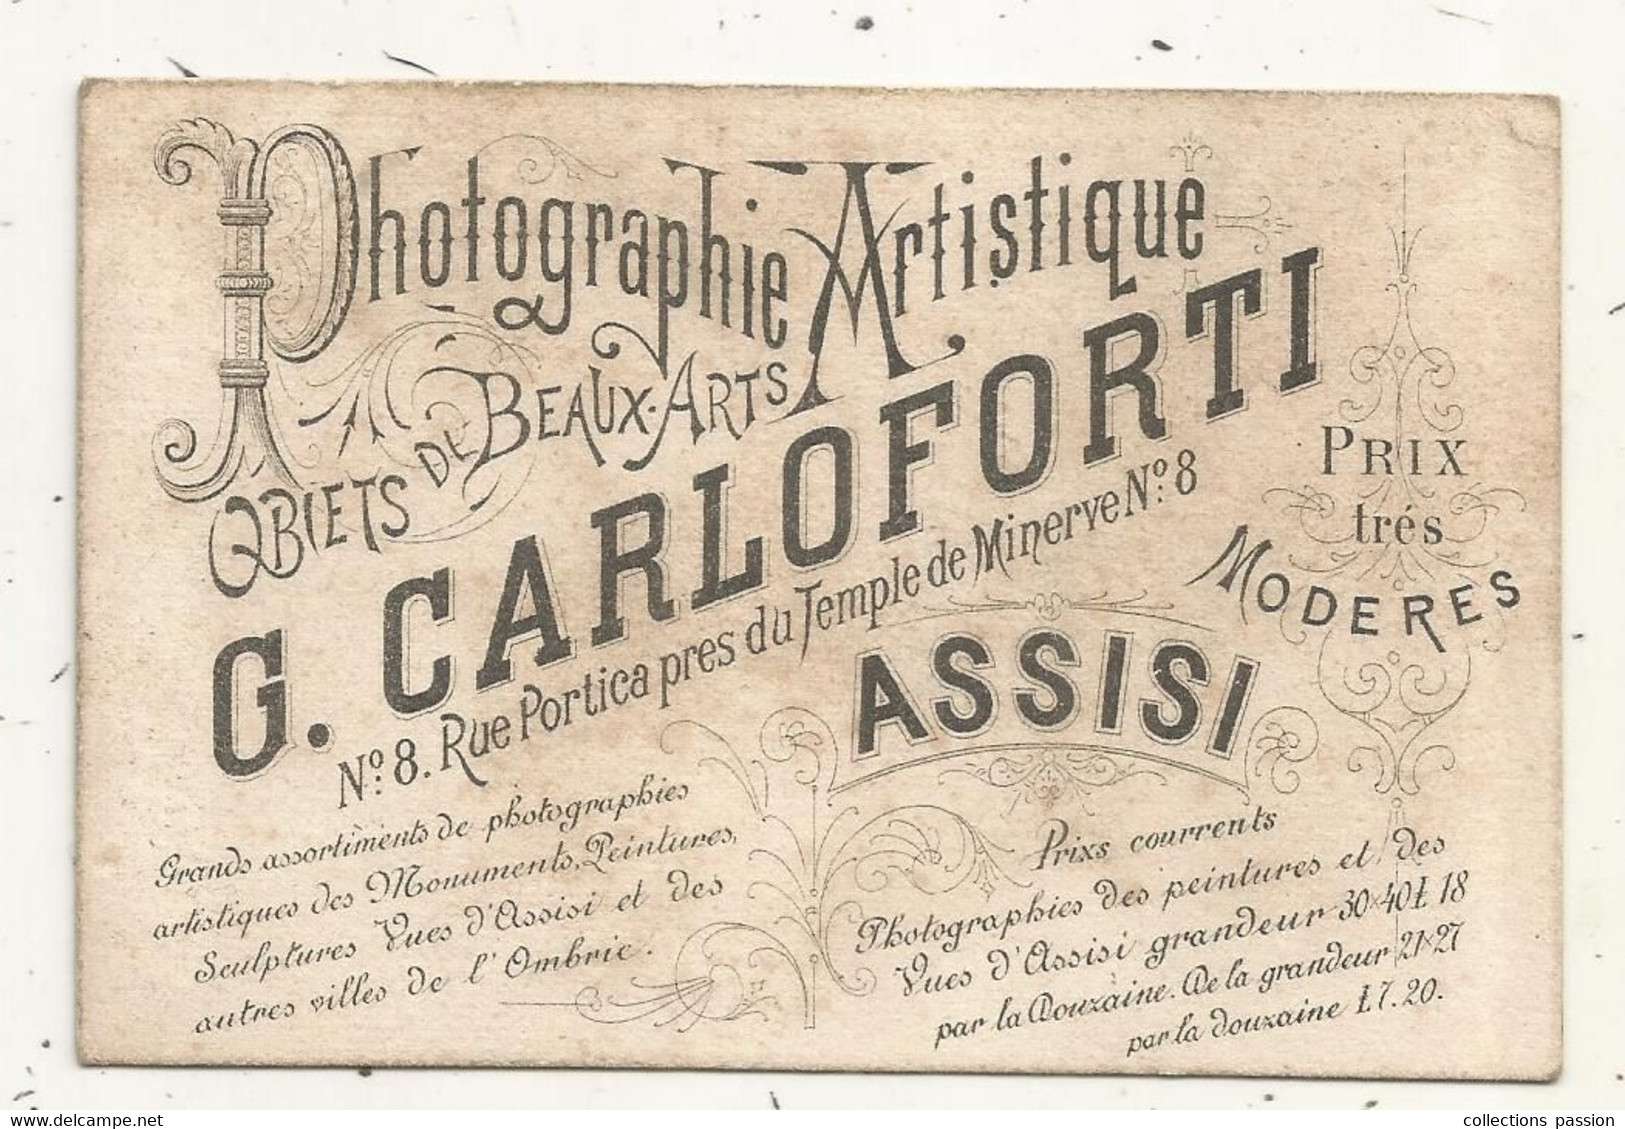 Carte De Visite, ITALIE, ASSISI,  Photographie Artistique G. Carloforti - Visiting Cards